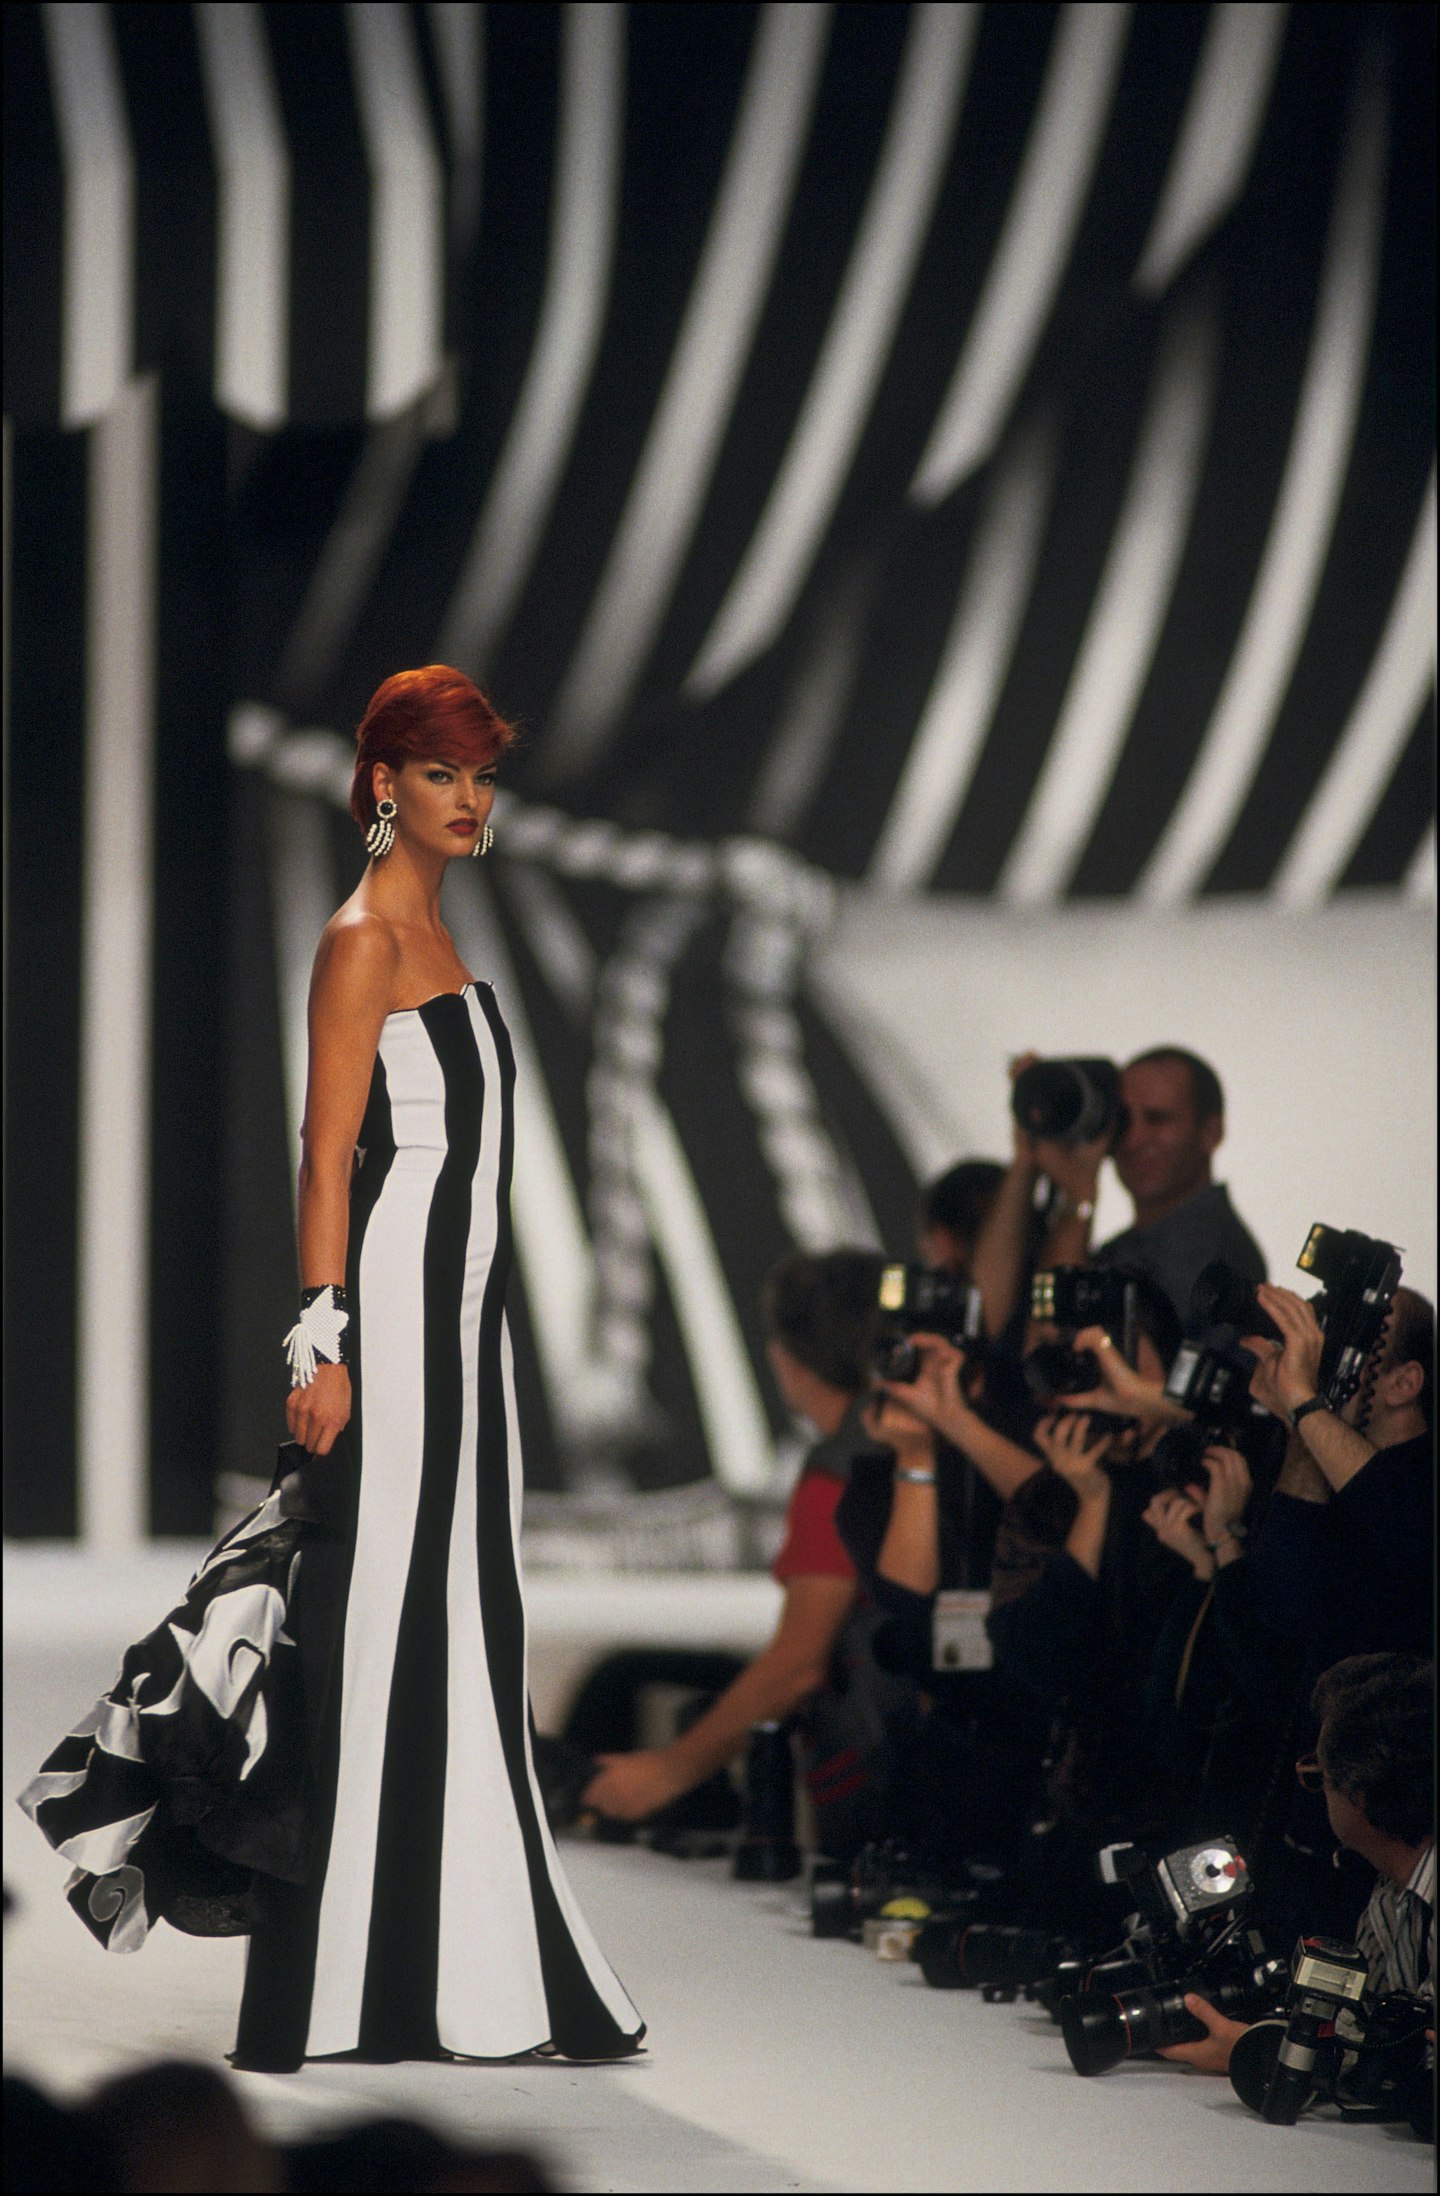 Zendaya WOWS at Louis Vuitton show in a double-zipper dress. I mean my, Zendaya